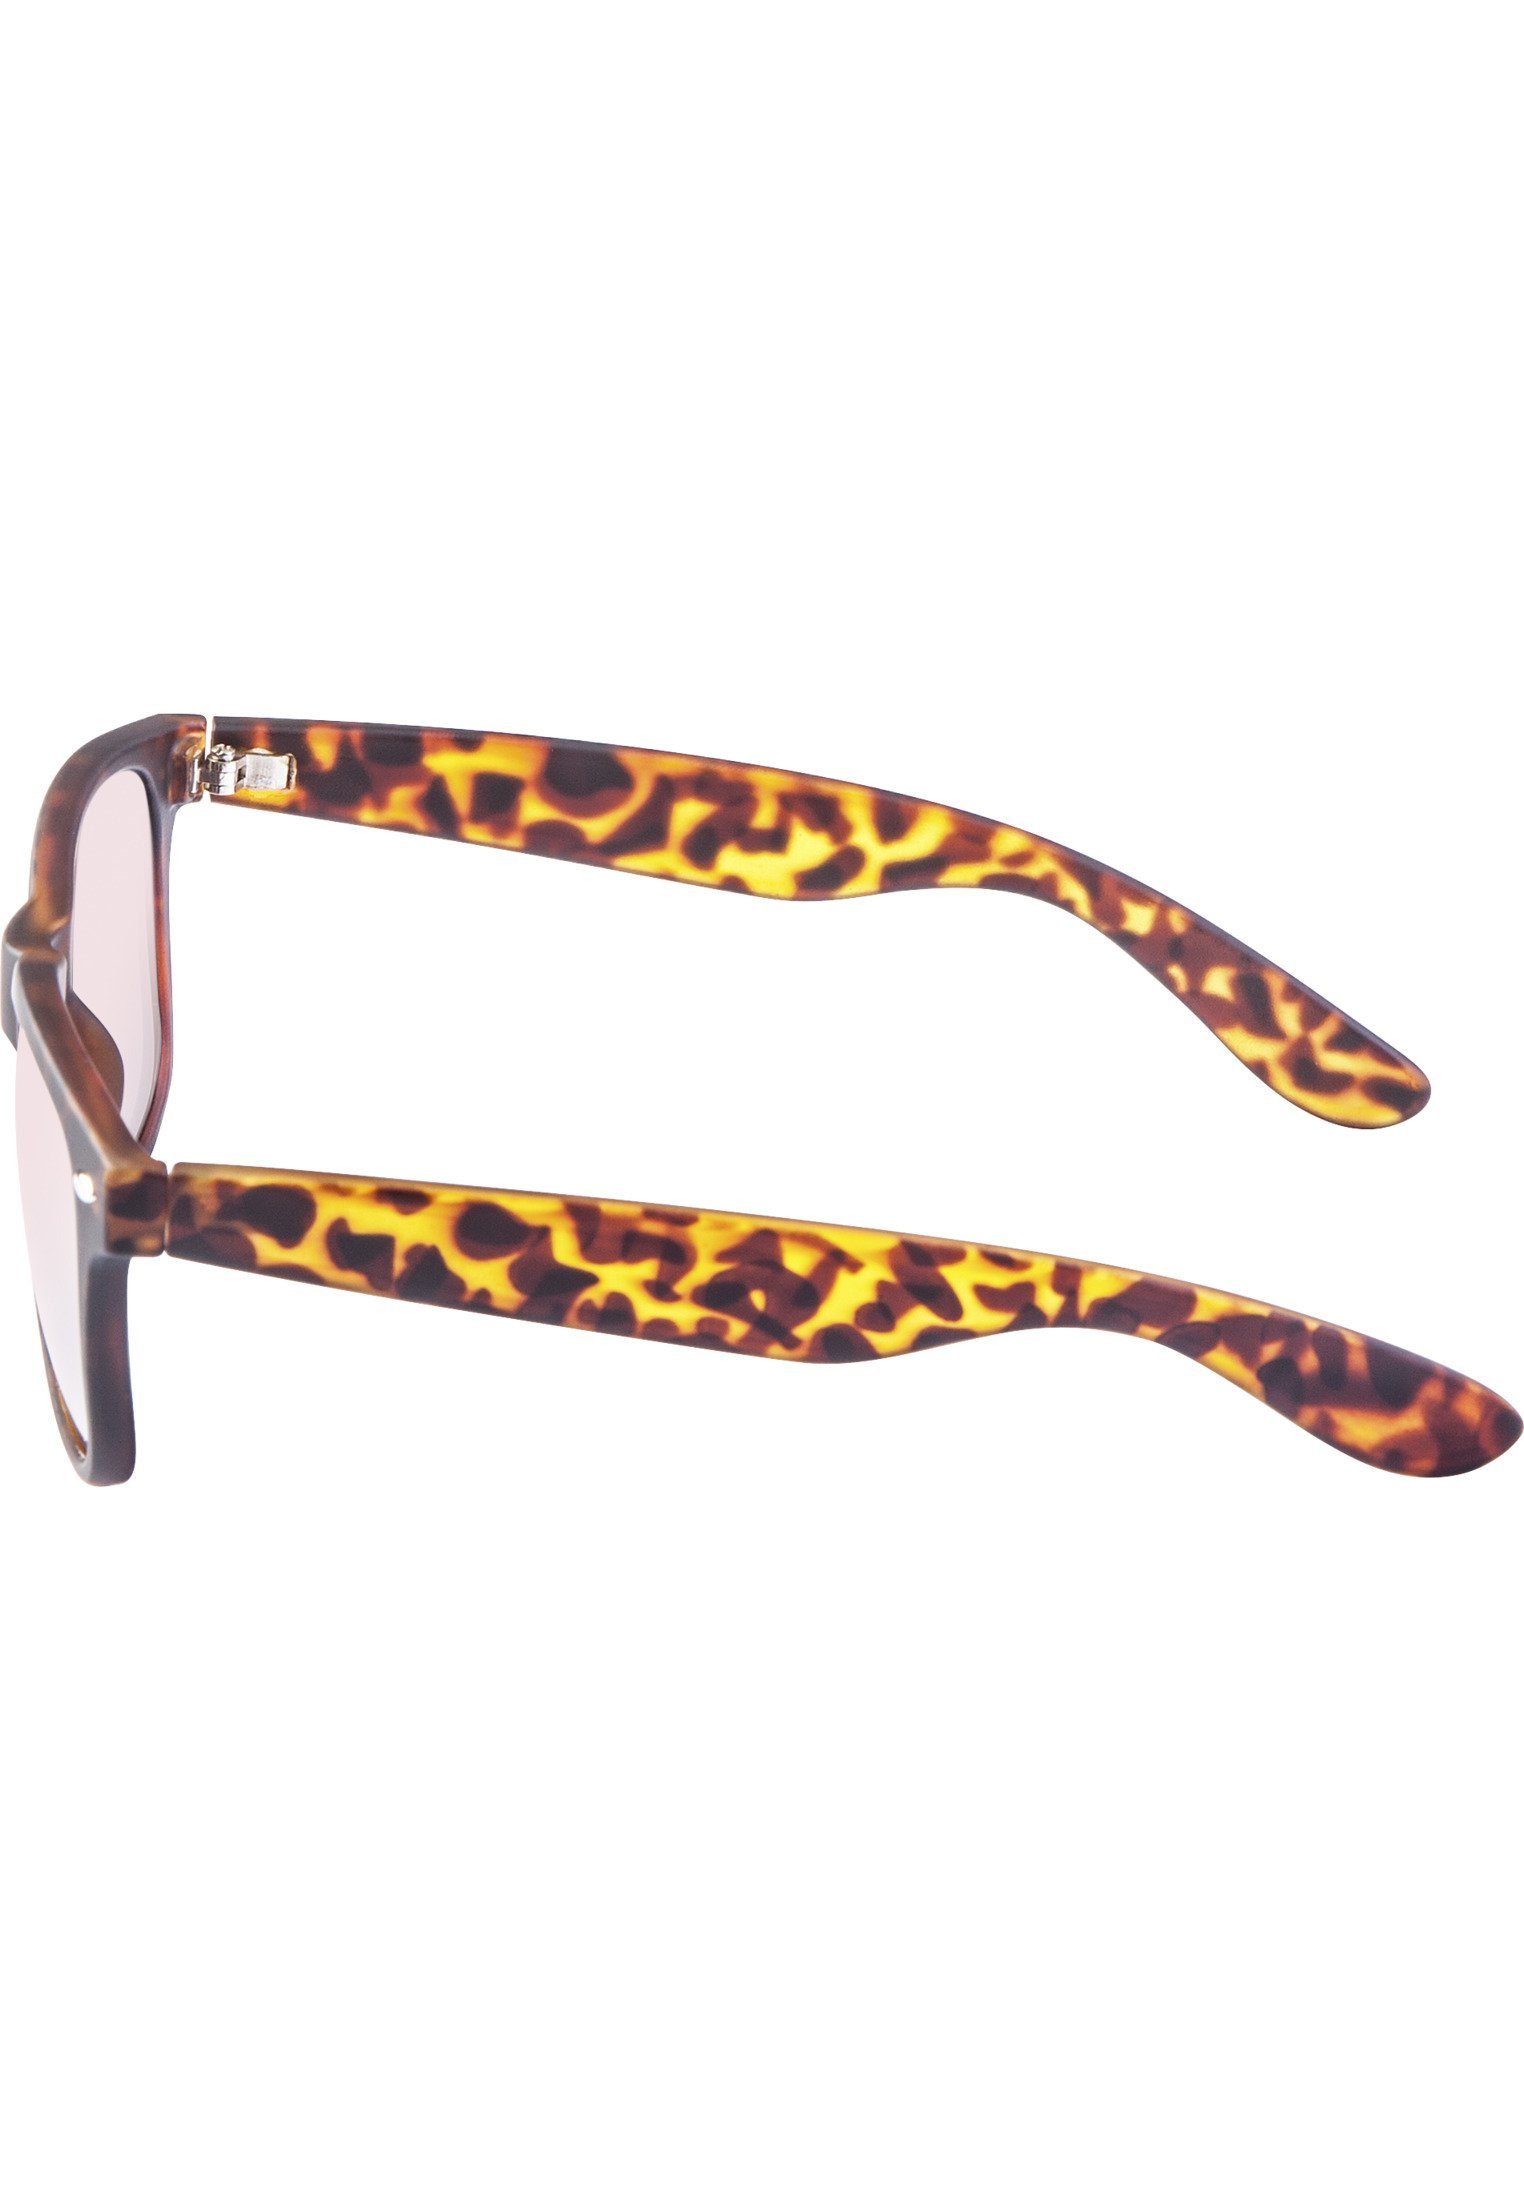 havanna/rosé Likoma Sunglasses Youth MSTRDS Sonnenbrille Accessoires